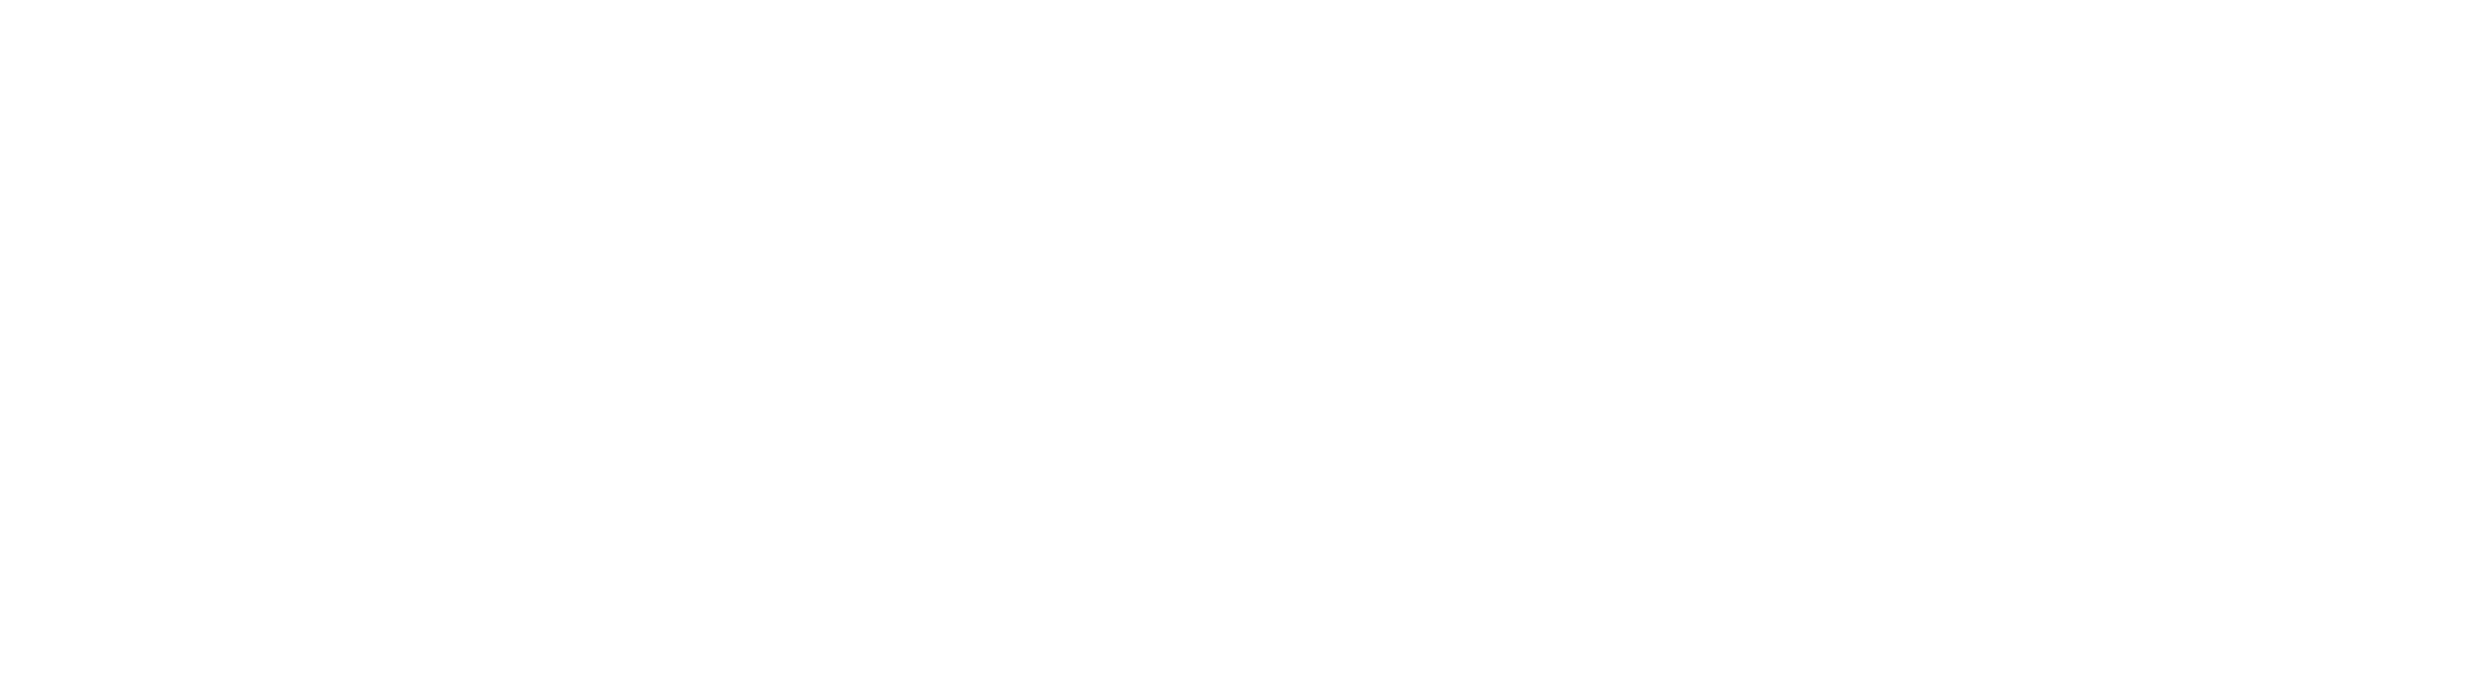 Blue Canyon Property Management